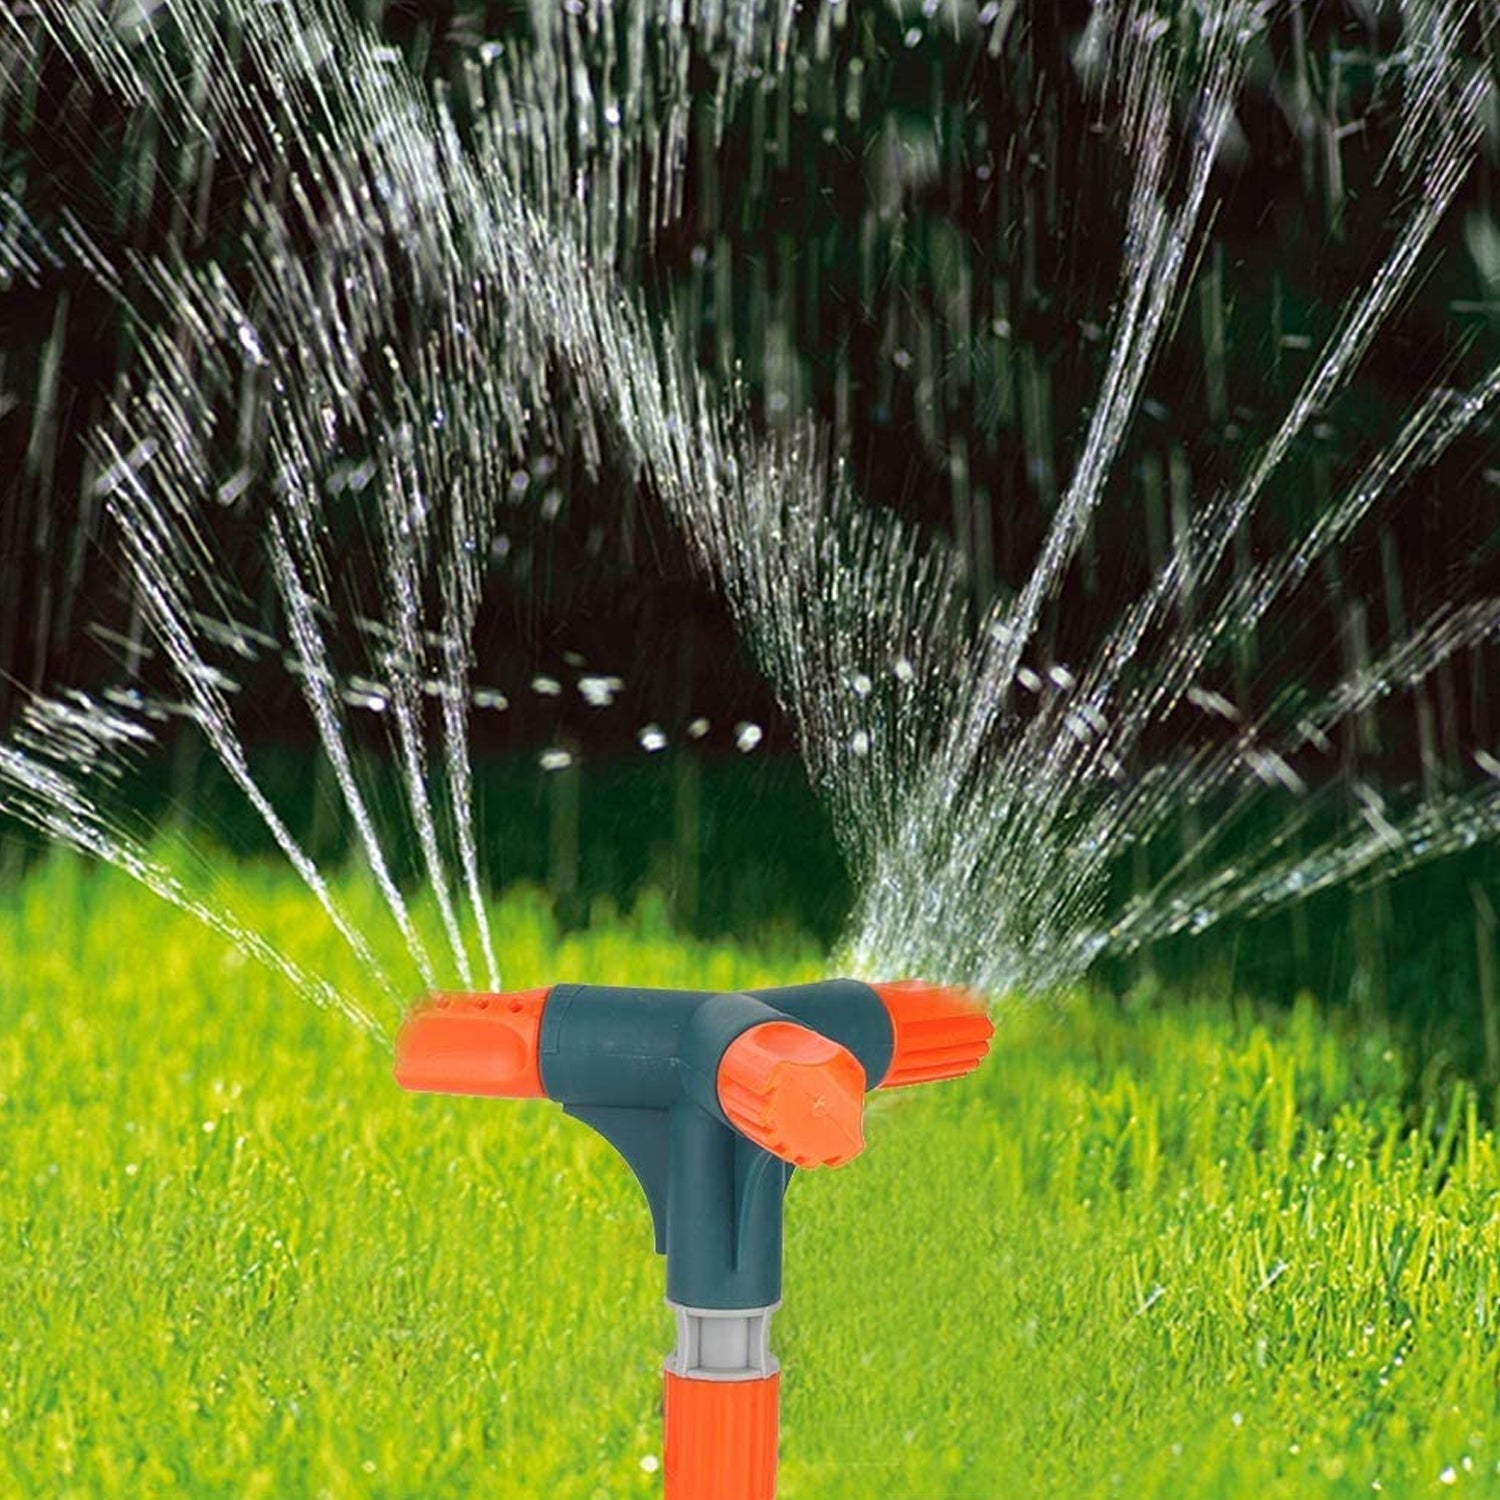 7537 Garden Sprinkler 360 ° Rotating Adjustable Round 3 Arm Lawn Water Sprinkler for Watering Garden Plants/Pipe Hose Irrigation Yard Water Sprayer 